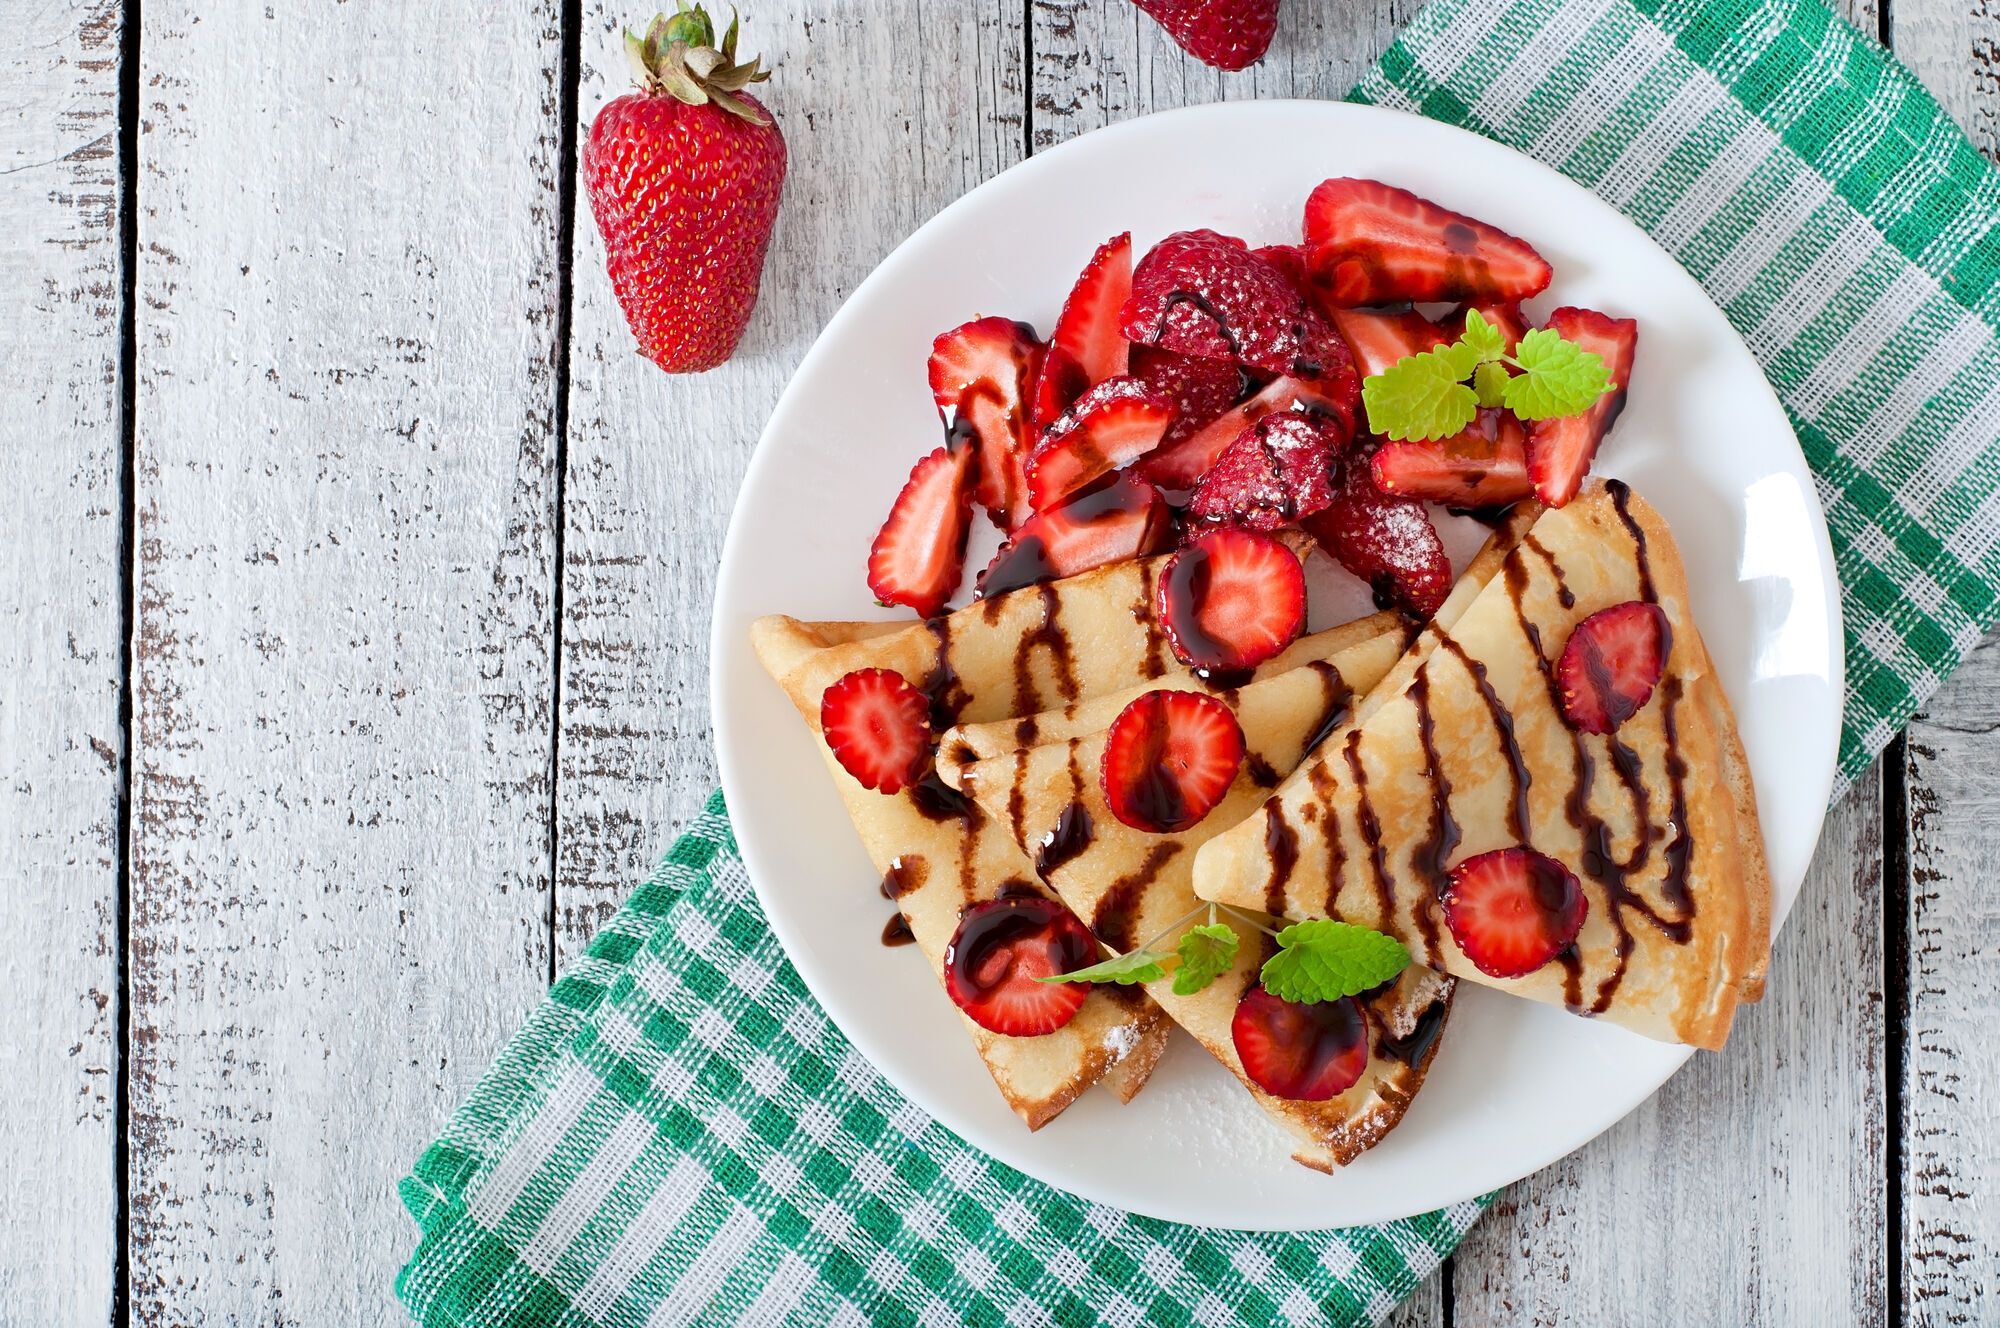 Top 10 sweet and savory pancake fillings